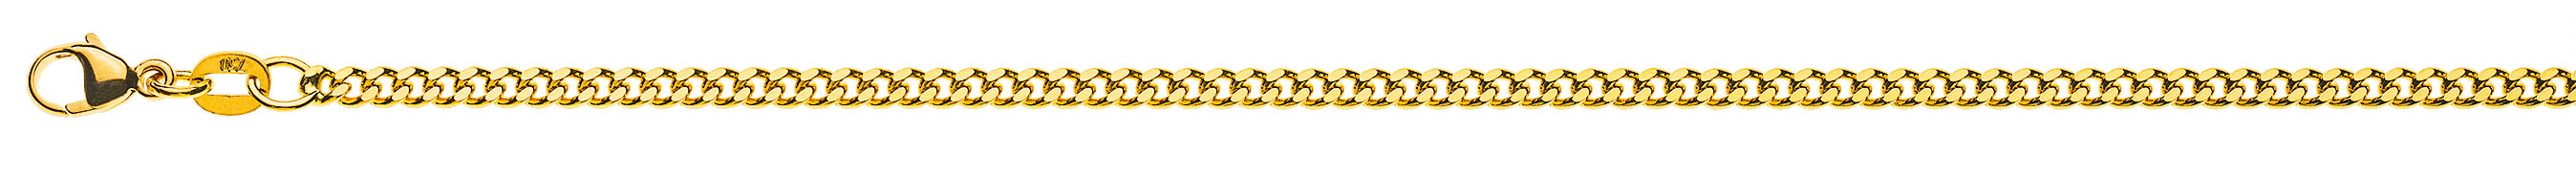 AURONOS Prestige Necklace yellow gold 18K curb chain polished 60cm 2.6mm